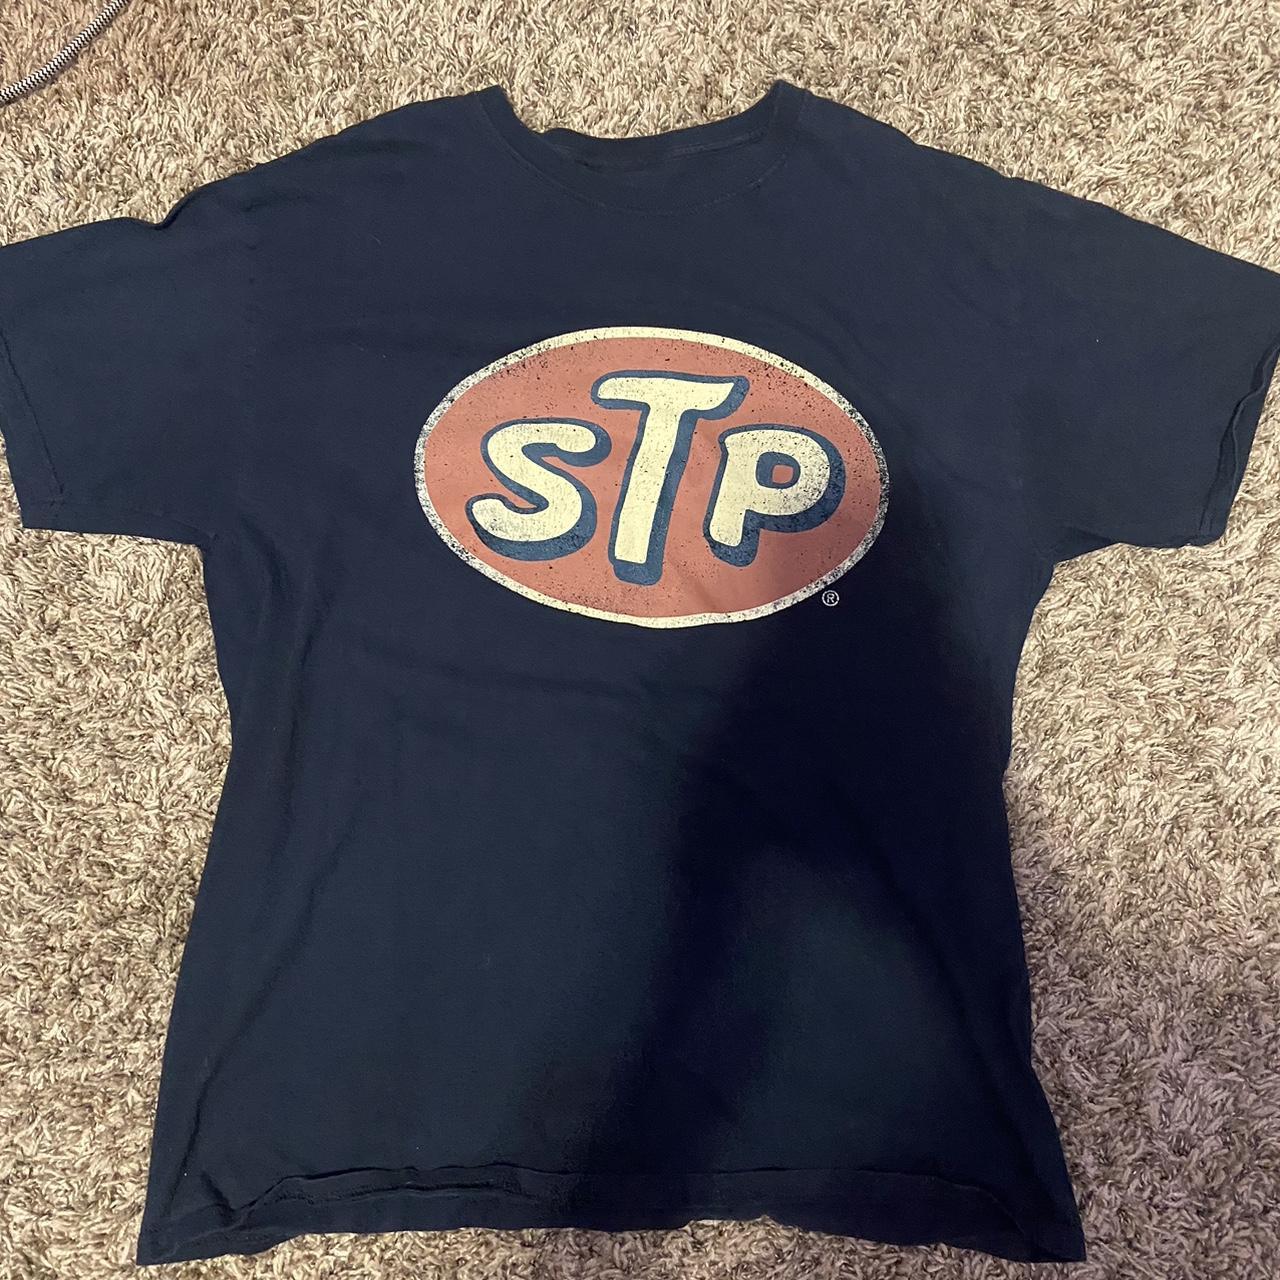 Stp vintage tee shirt Size :L - Depop